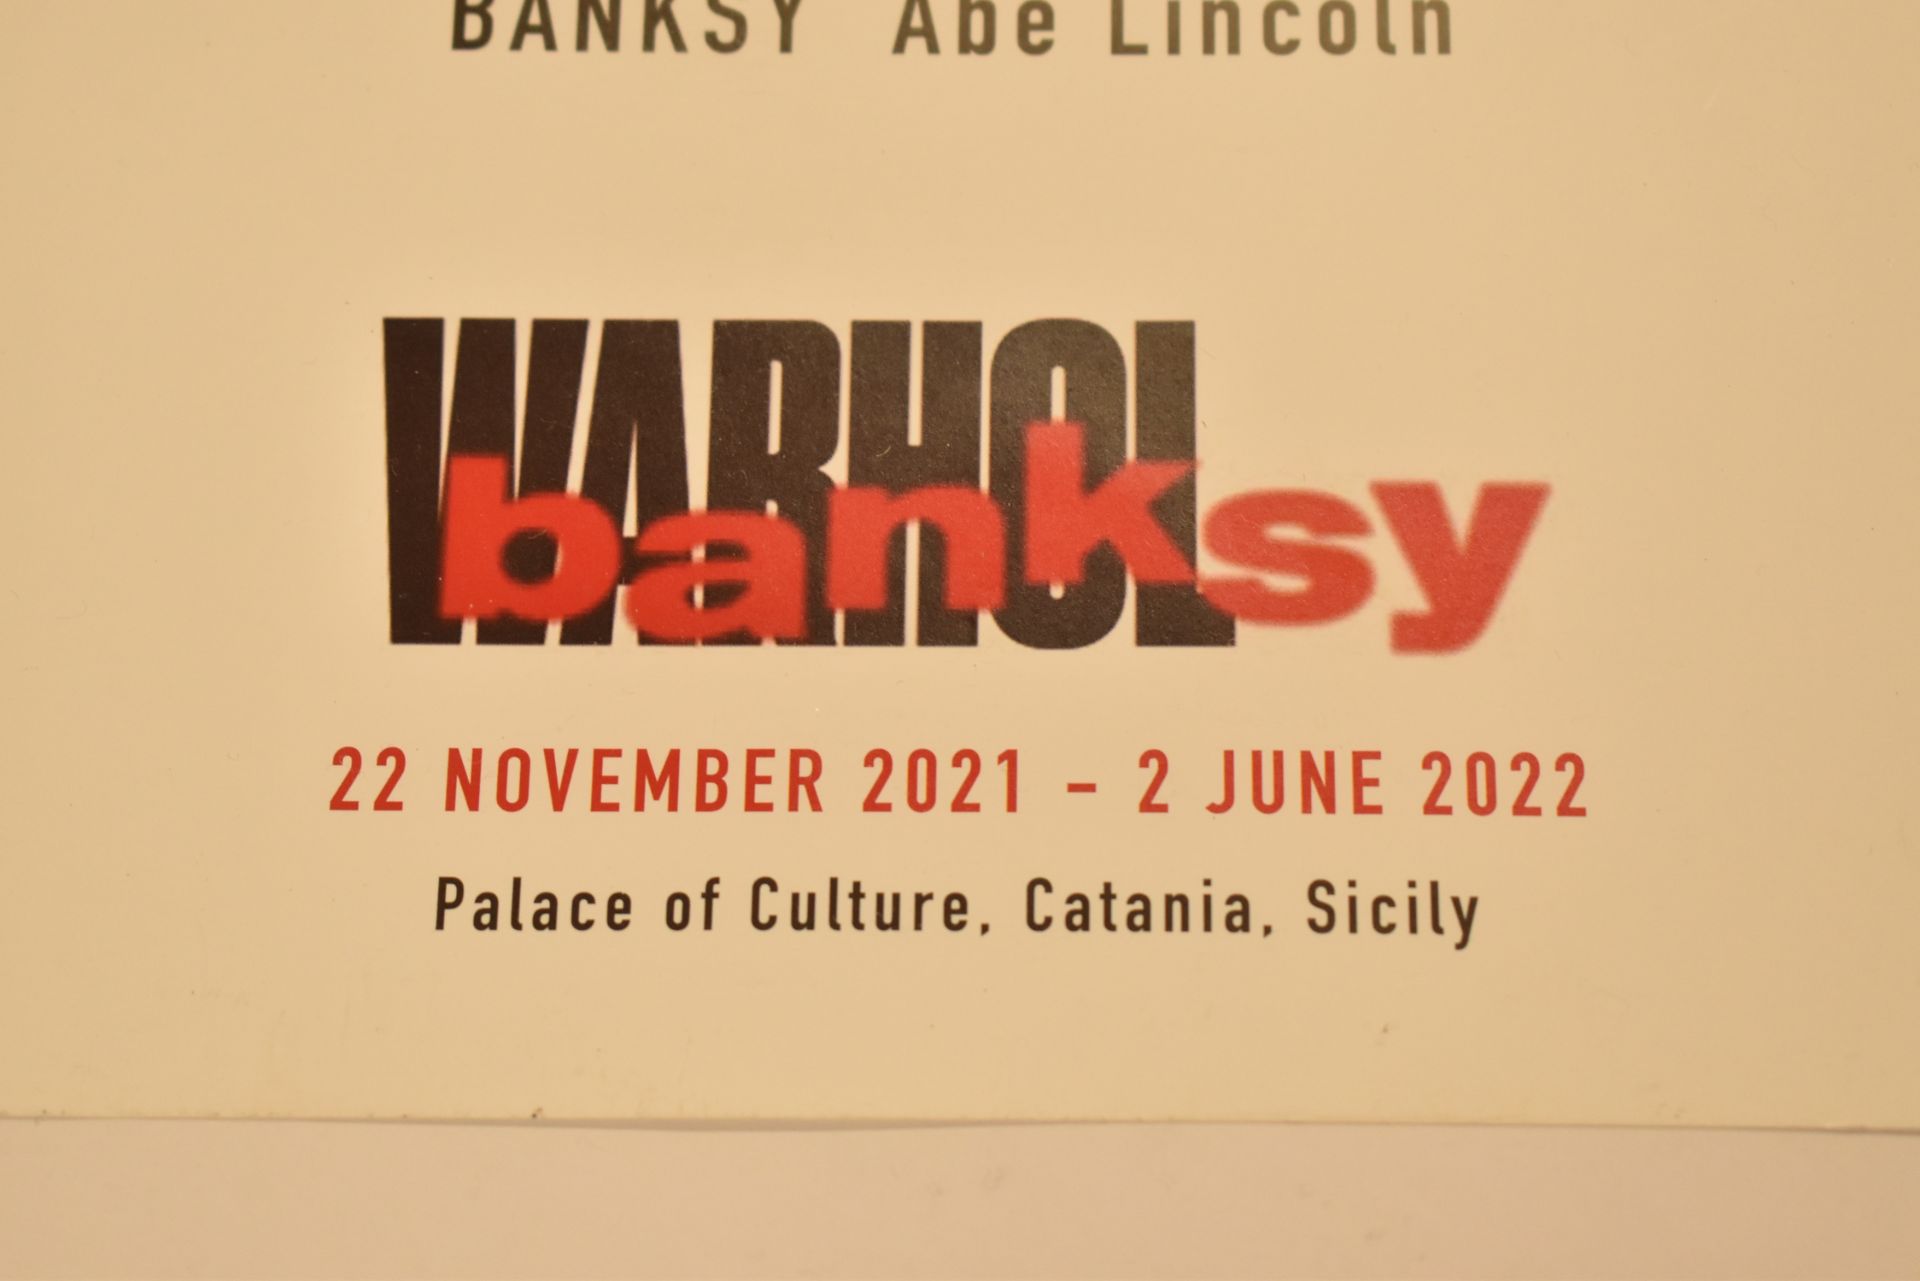 BANKSY - PROMO POSTER FOR WARHOL / BANKSY EXHIBITION, SICILY - Image 4 of 5